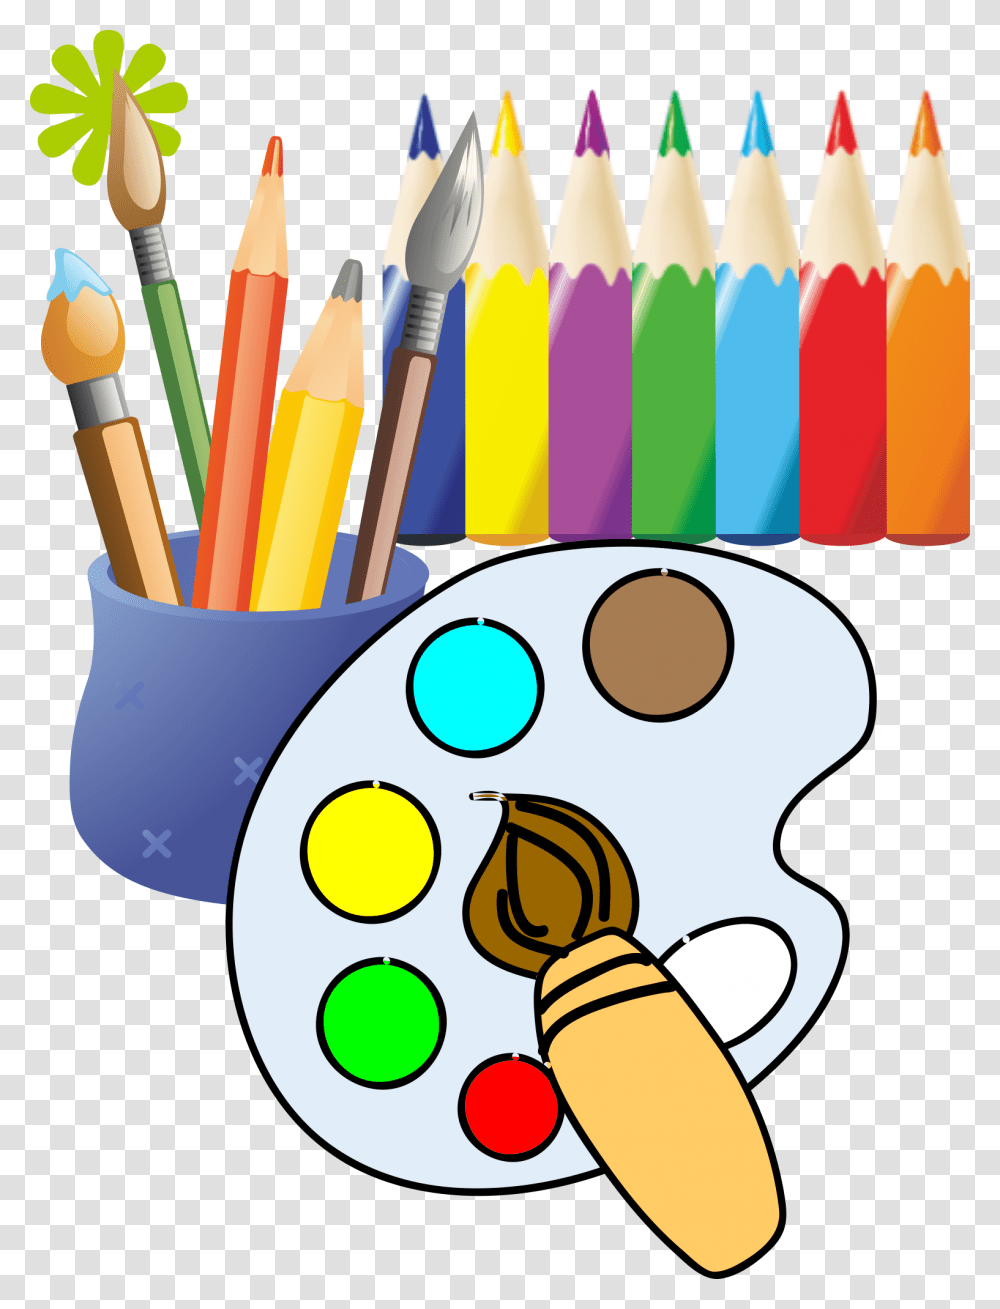 Download Paint Clipart Painting Decorating And Inspiration Drawing And Painting Clip Art, Paint Container, Pencil, Palette Transparent Png